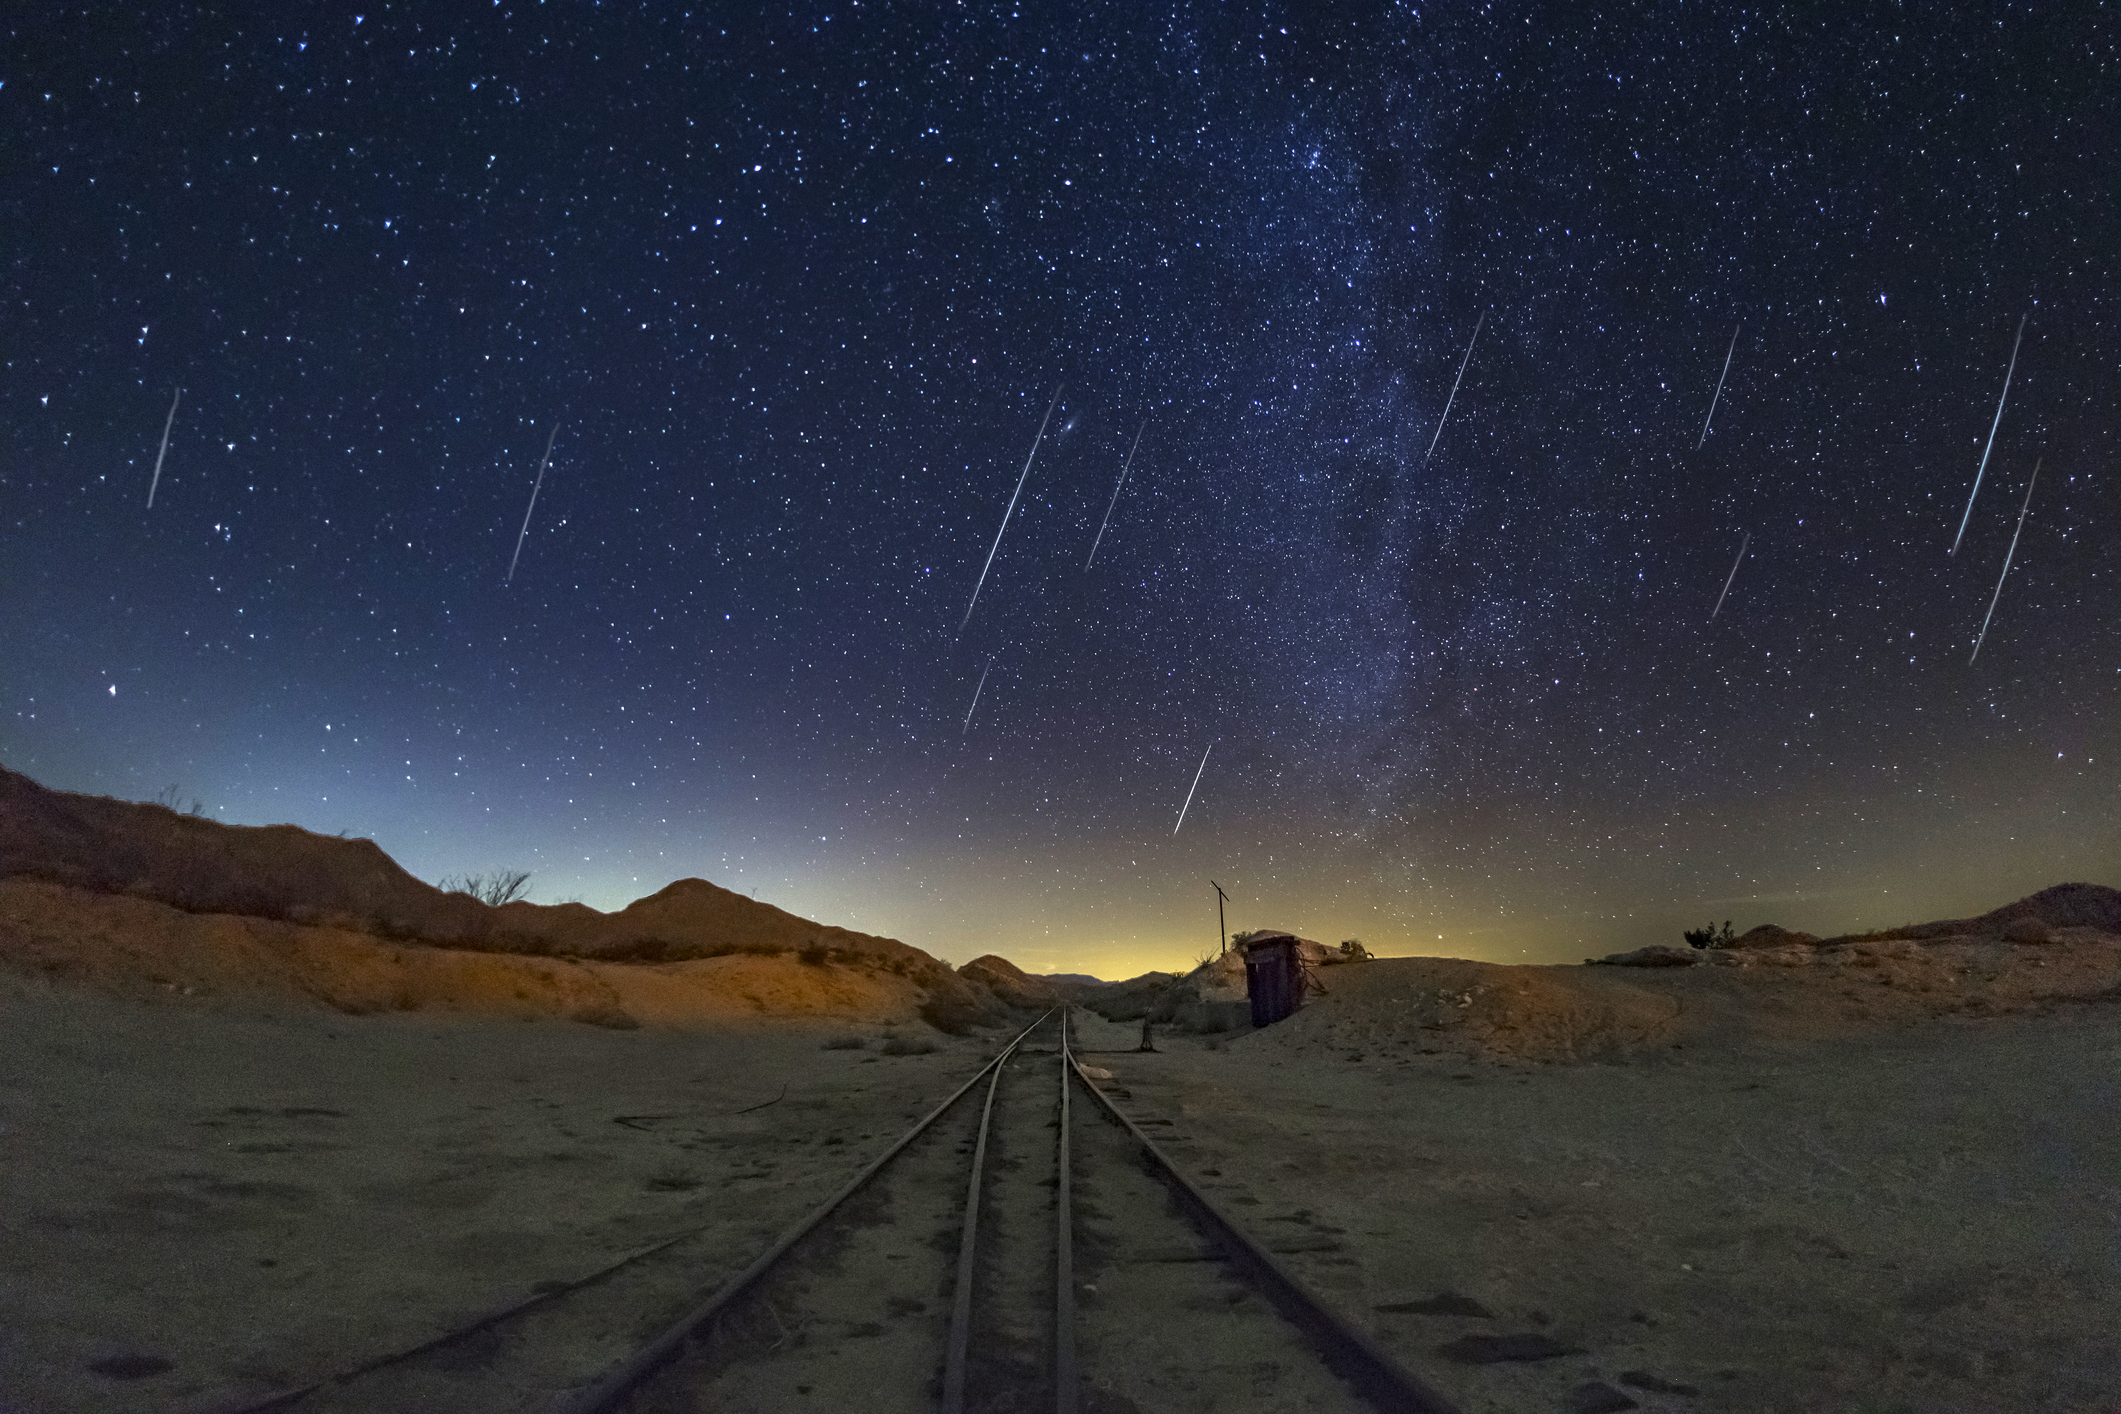 Vegas could see meteor shower from broken comet